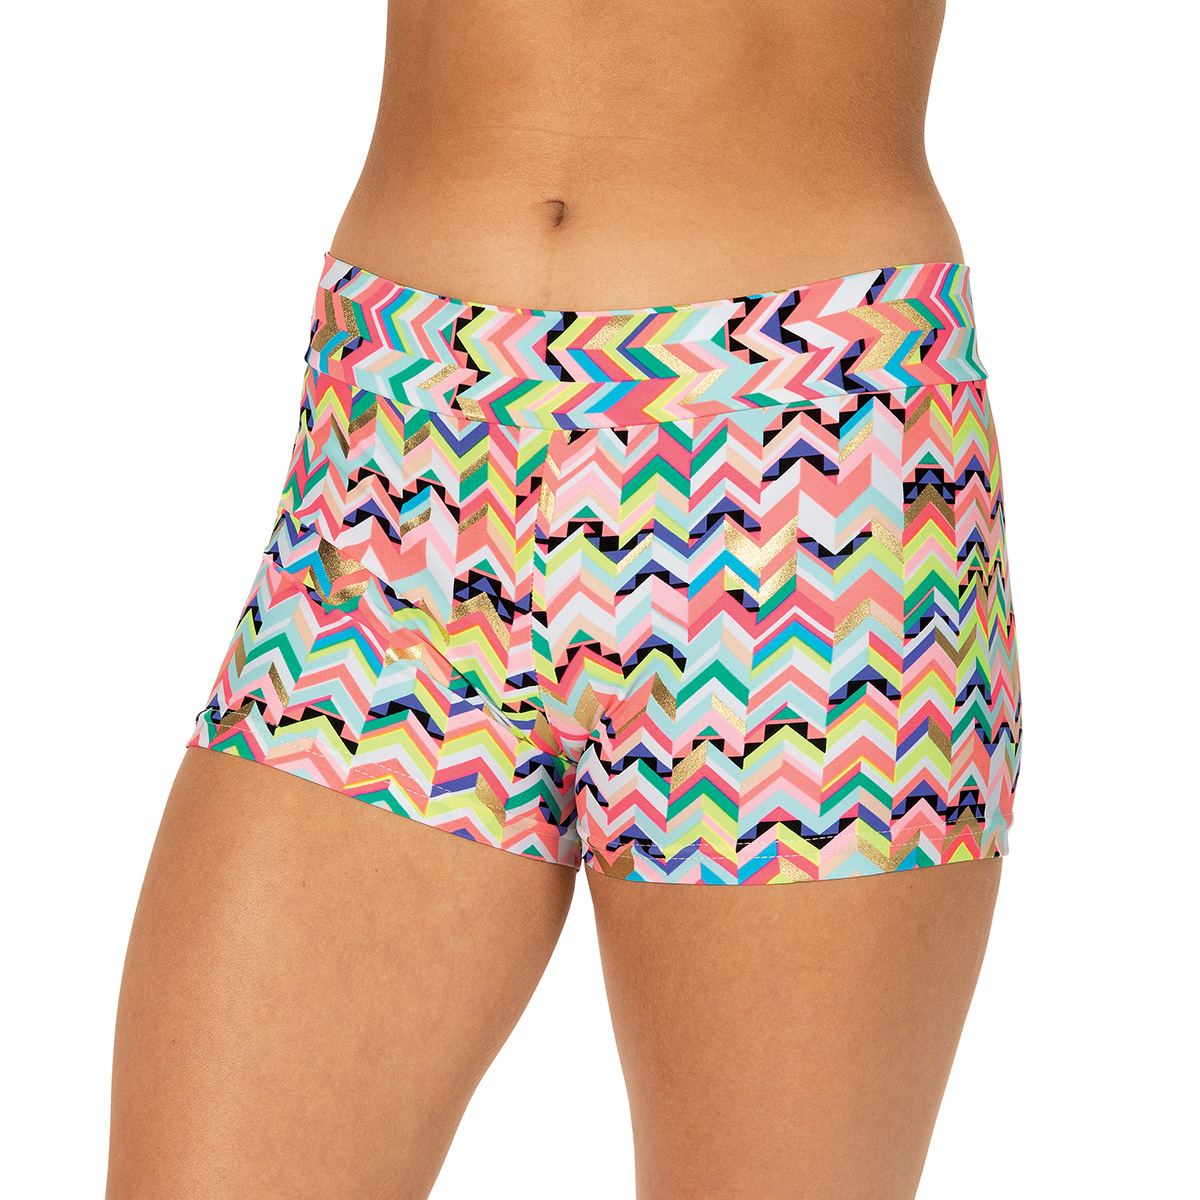 Mid-Rise Elastic Waist Hot Shorts - Multi-Color Chevron